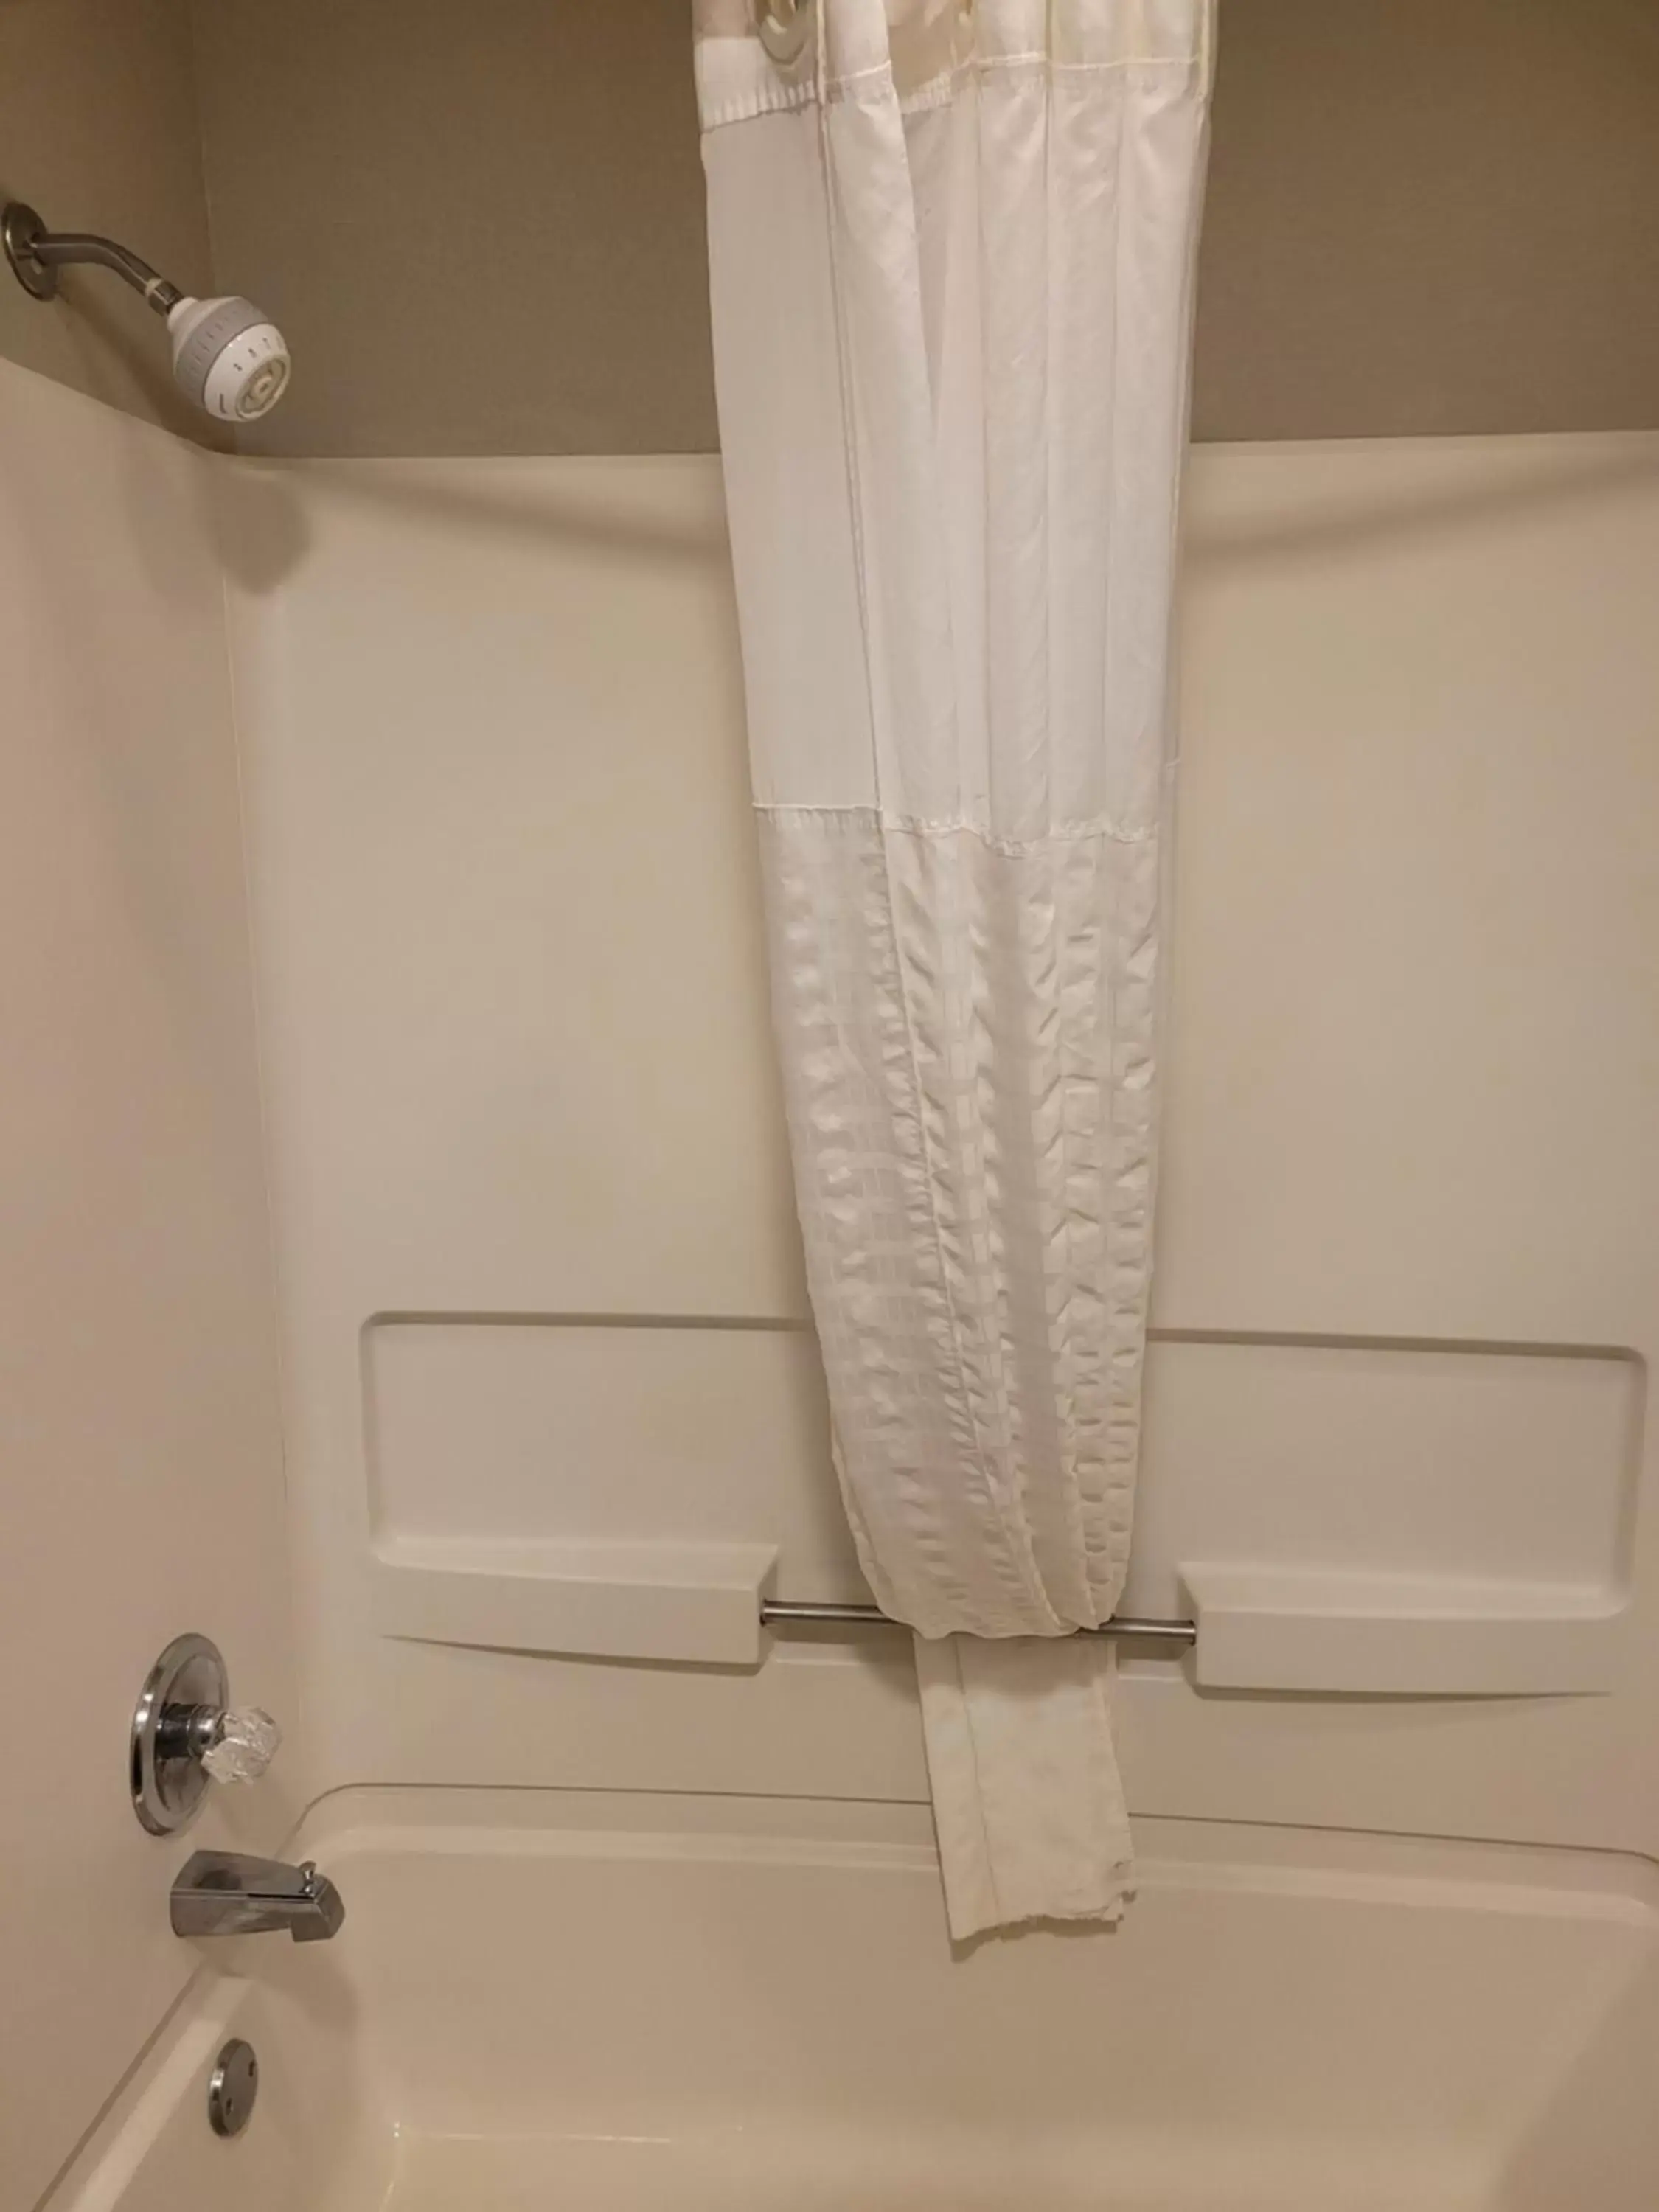 Bathroom in Comfort Inn Cleveland Airport